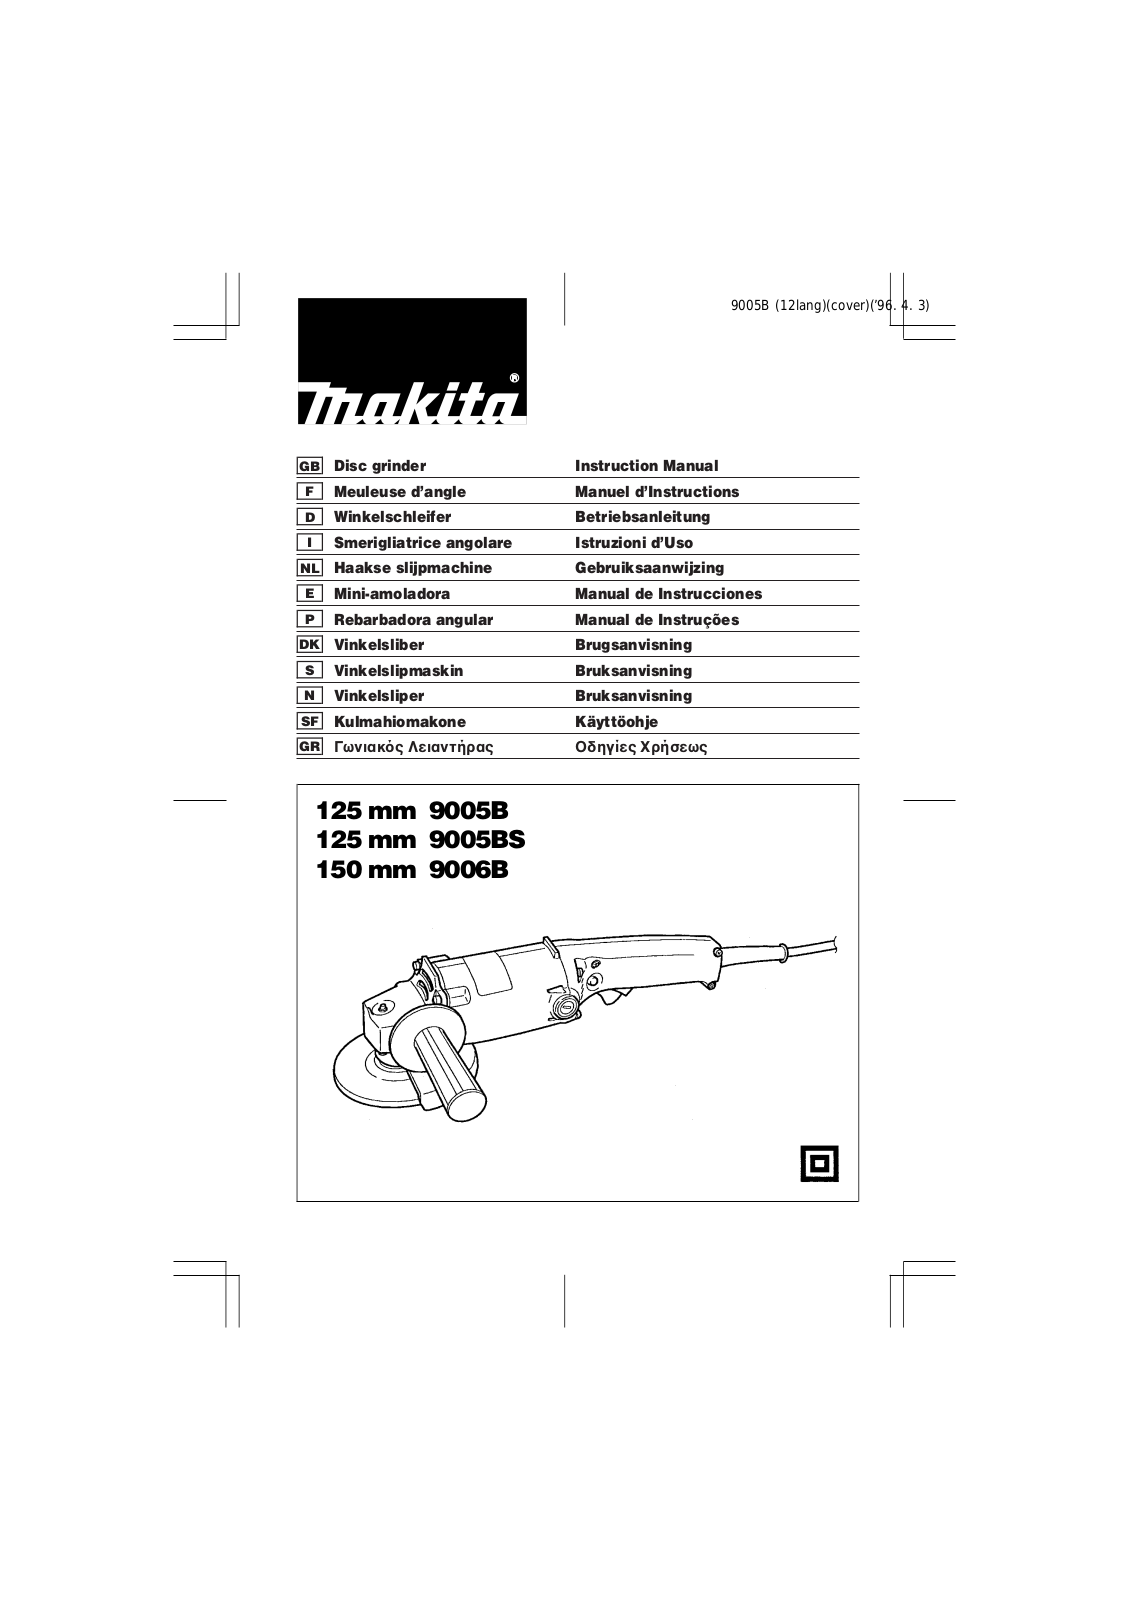 Makita 9006B, 9005BS Manual